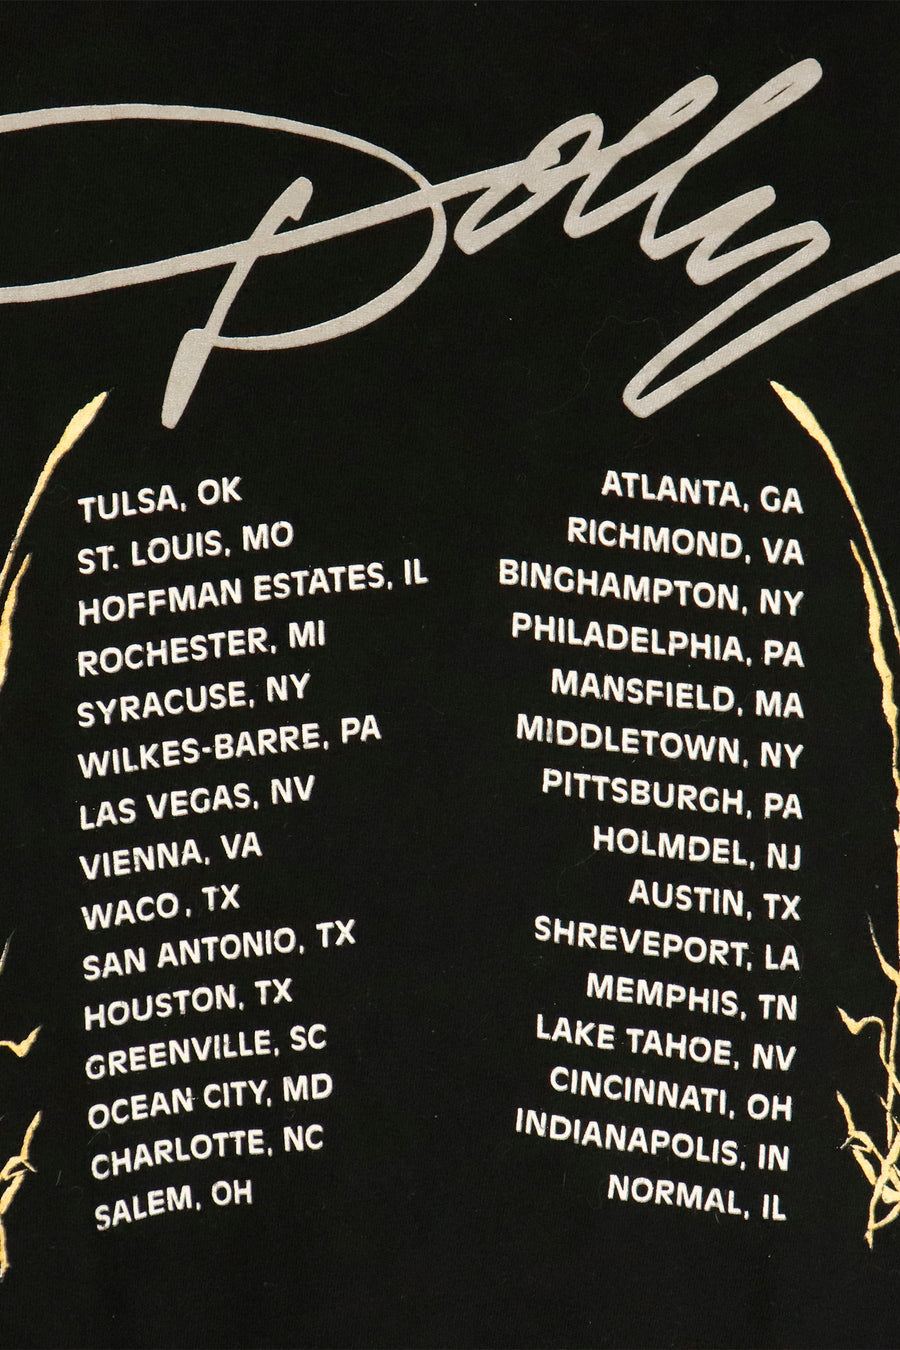 Vintage 1992 Dolly Parton Graphic Music T Shirt Sz XL